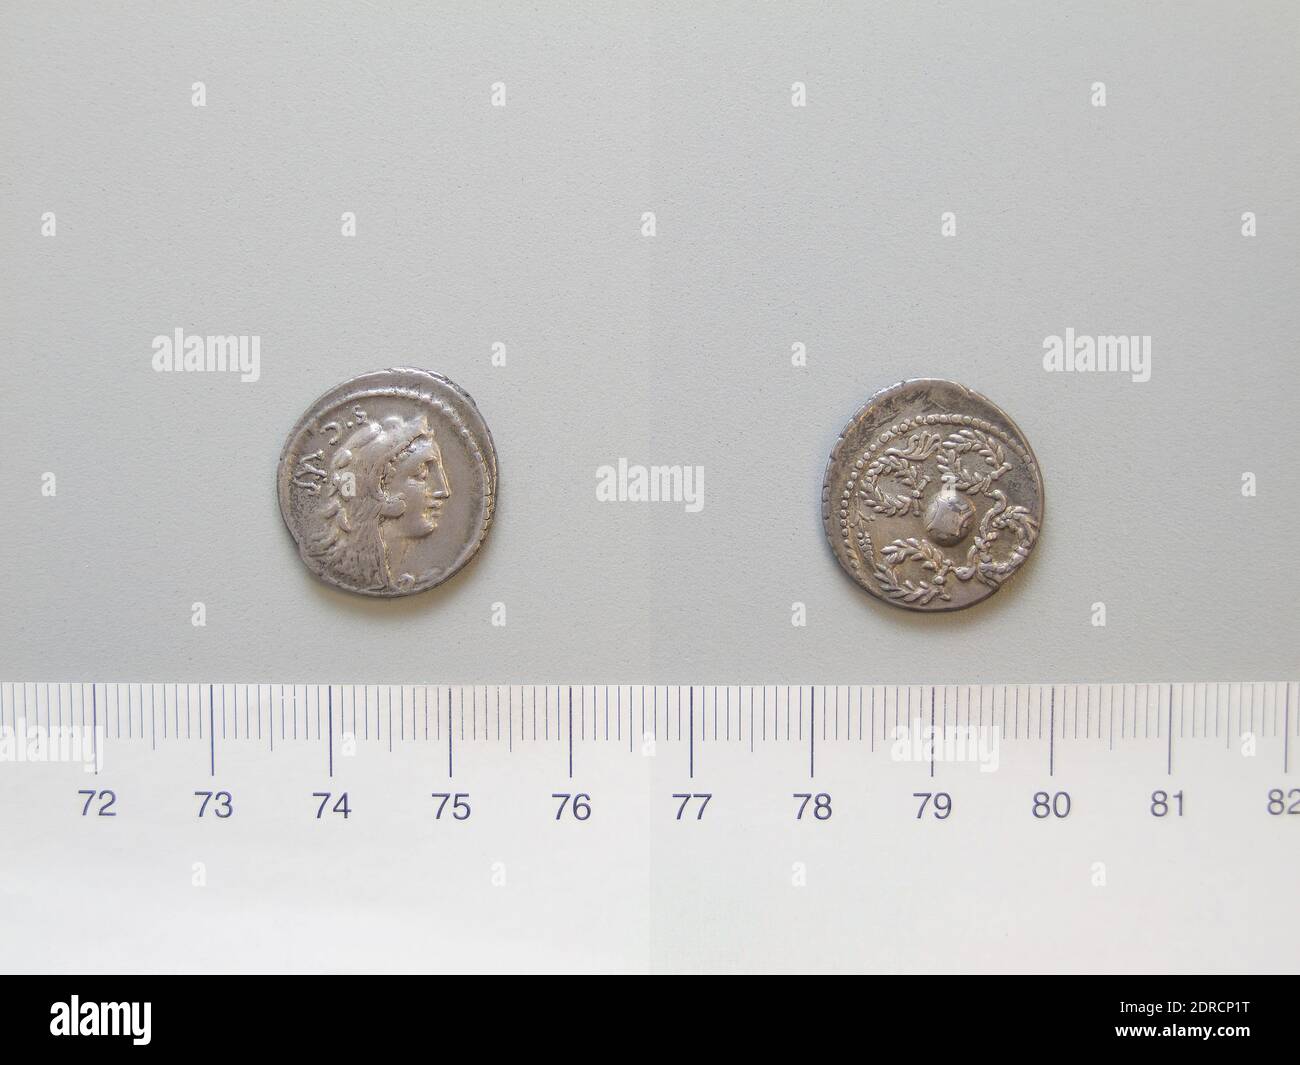 Mint: Rome, Magistrate: Faustus Cornelius Sulla, Denarius from Rome, 56 B.C., Silver, 3.54 g, 4:00, 18.8 mm, Made in Rome, Italy, Roman, 1st century B.C., Numismatics Stock Photo